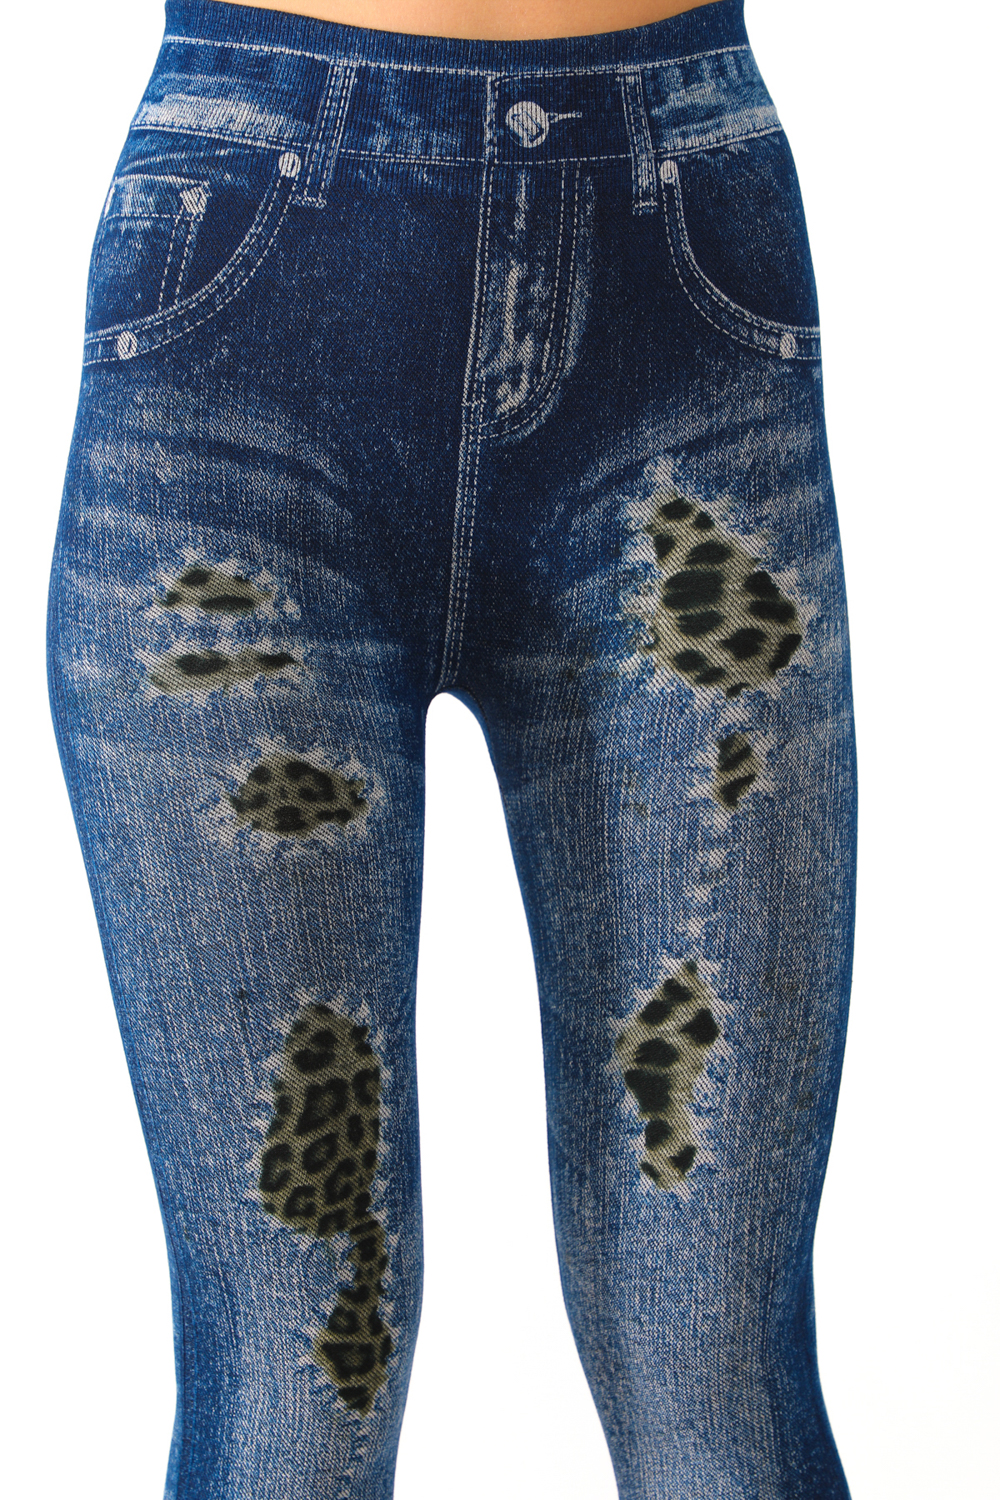 Denim Leggings with Leopard Patch Pattern - 6